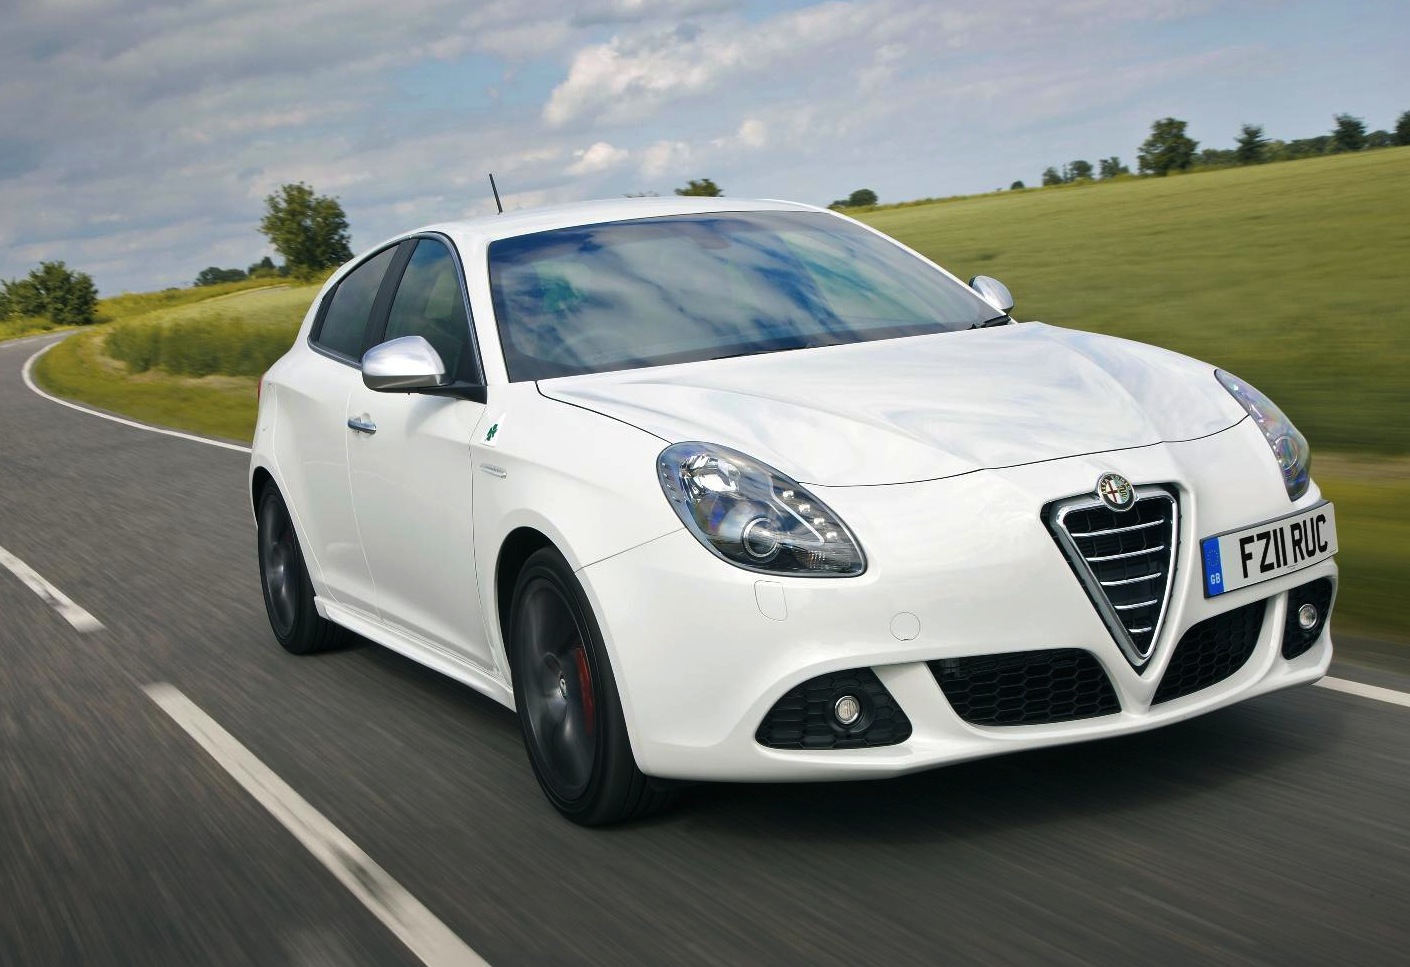 Alfa Romeo Giulietta ‘GTA’ on the way? – report